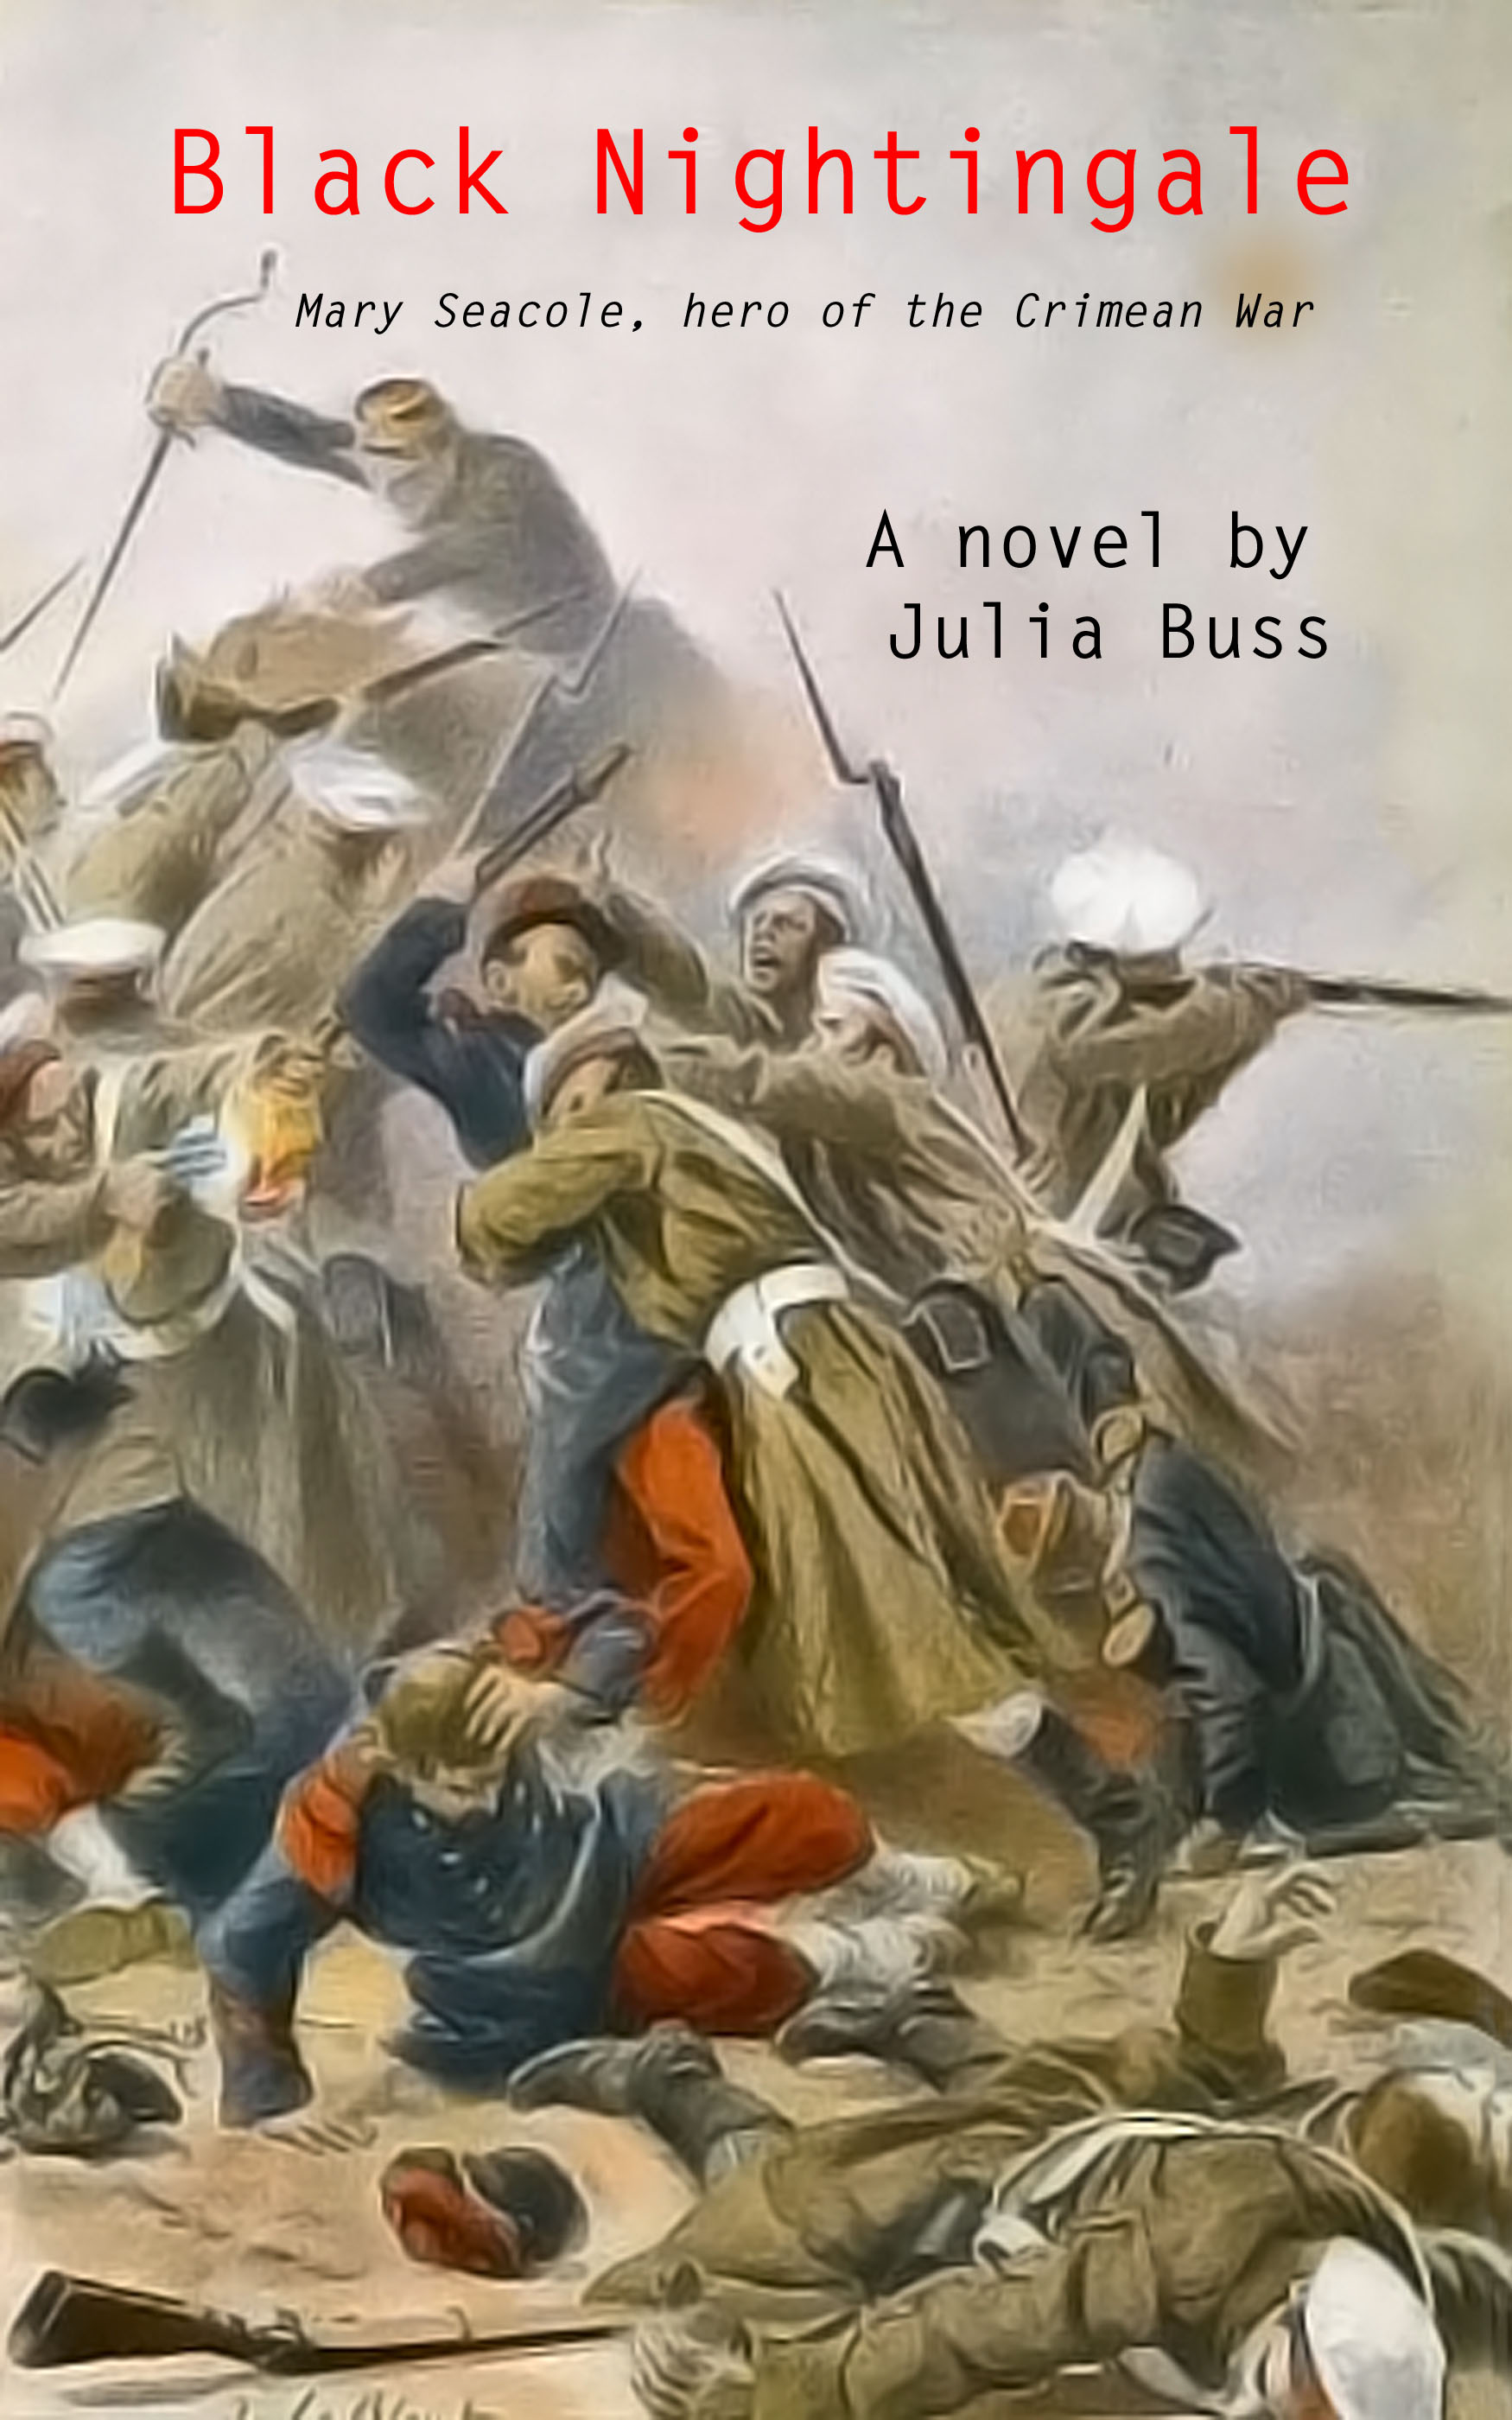 Black Nightingale: Mary Seacole, hero of the Crimean War